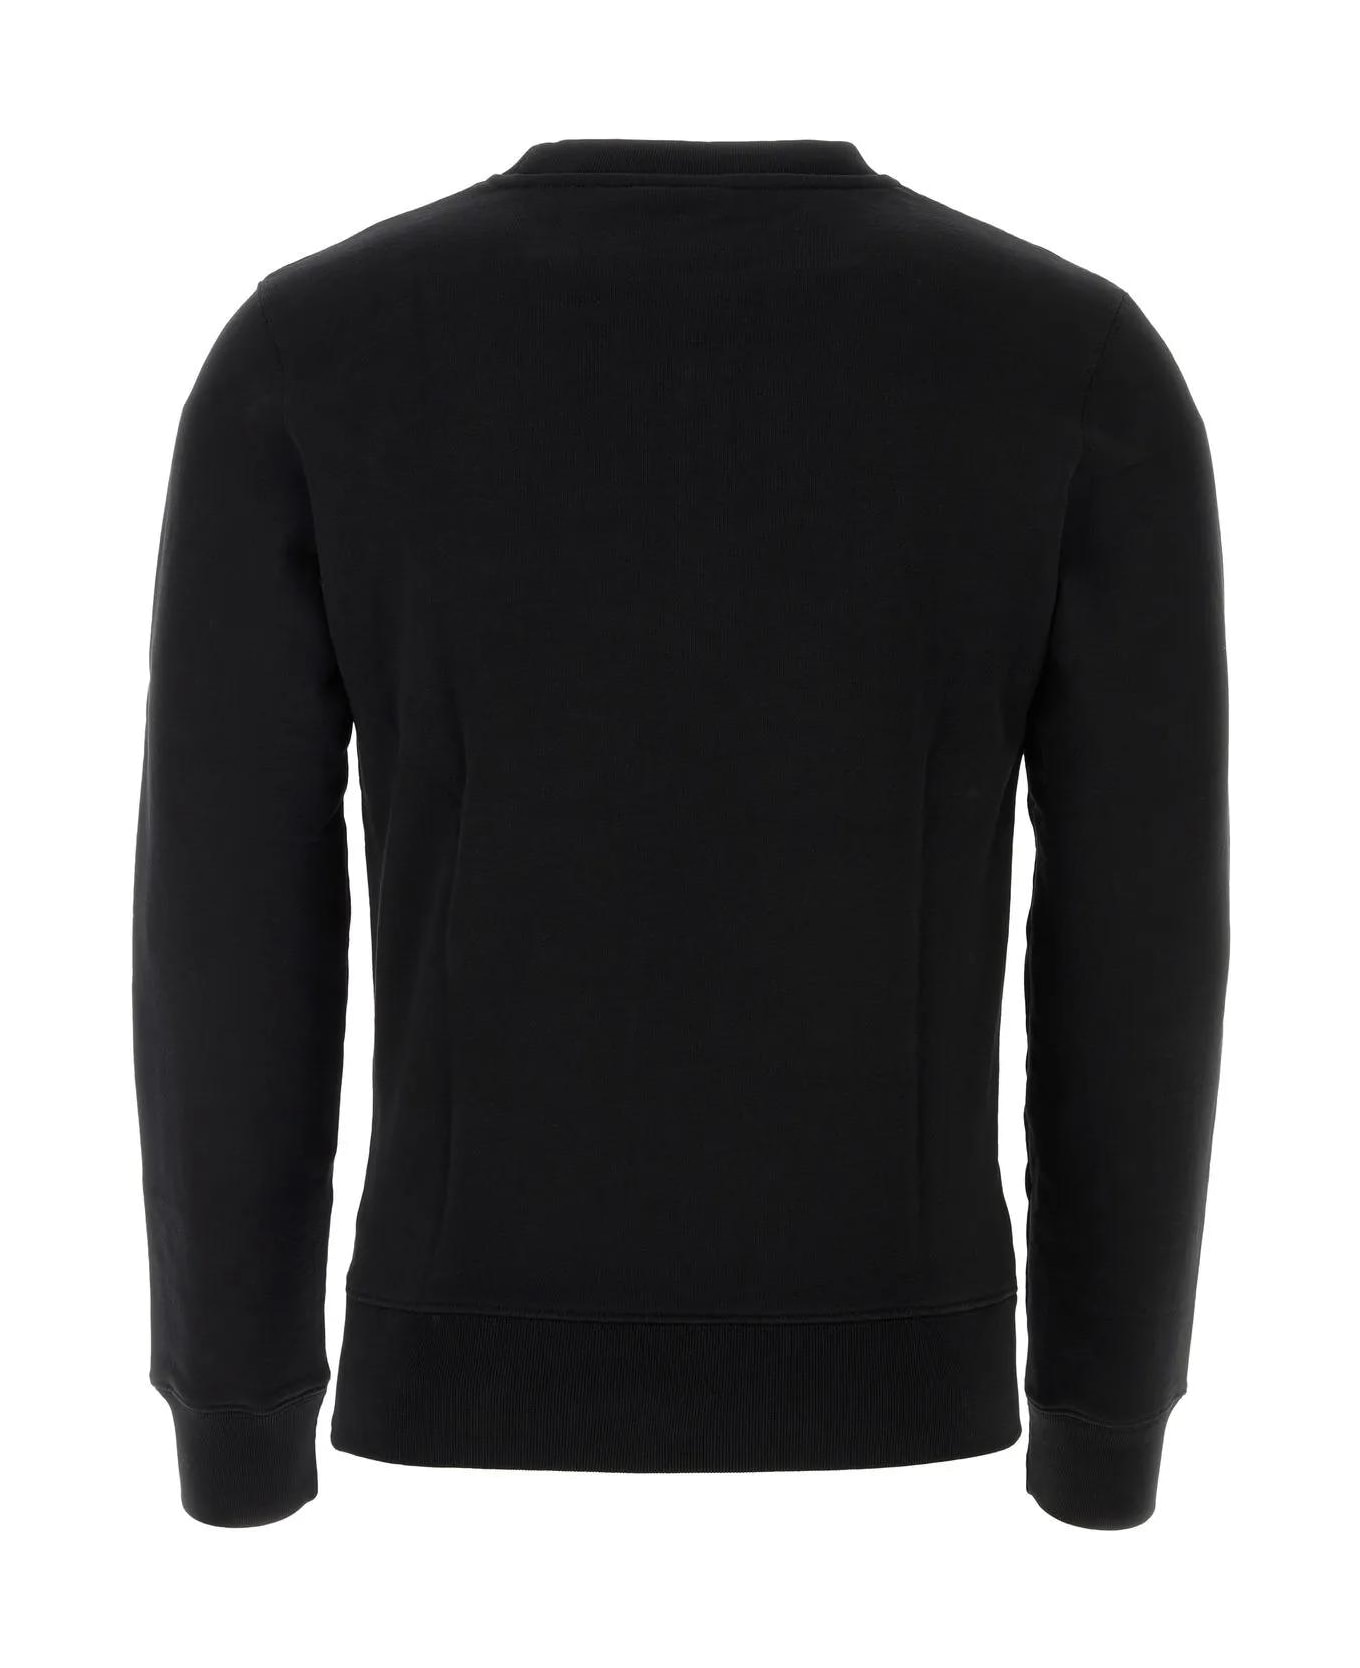 Maison Kitsuné Black Cotton Sweatshirt - Black